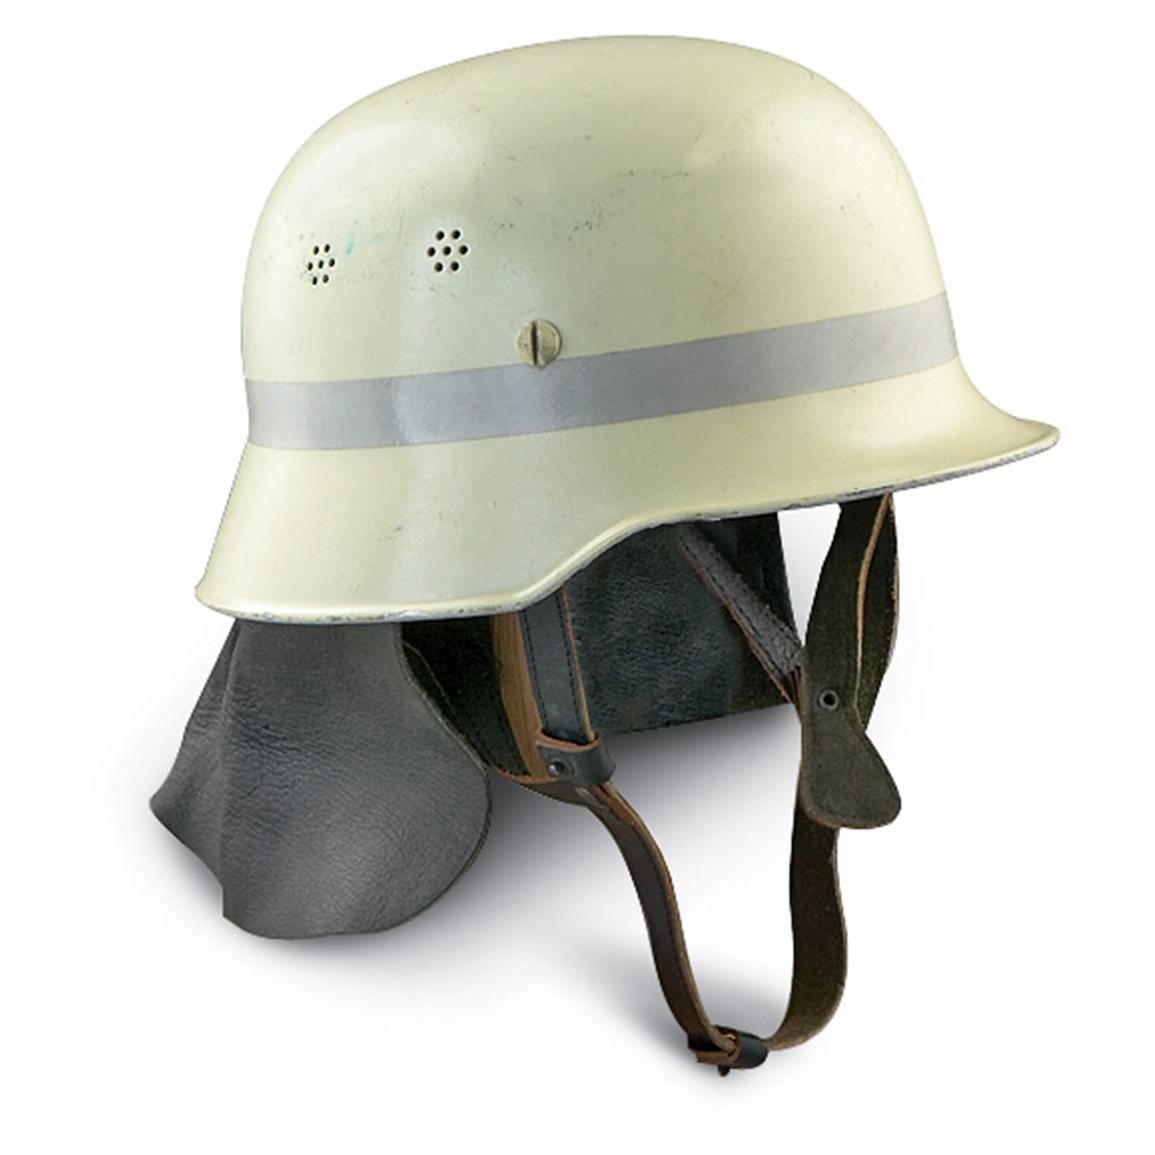 Used German Fireman's Helmet - 93212, Helmets ...